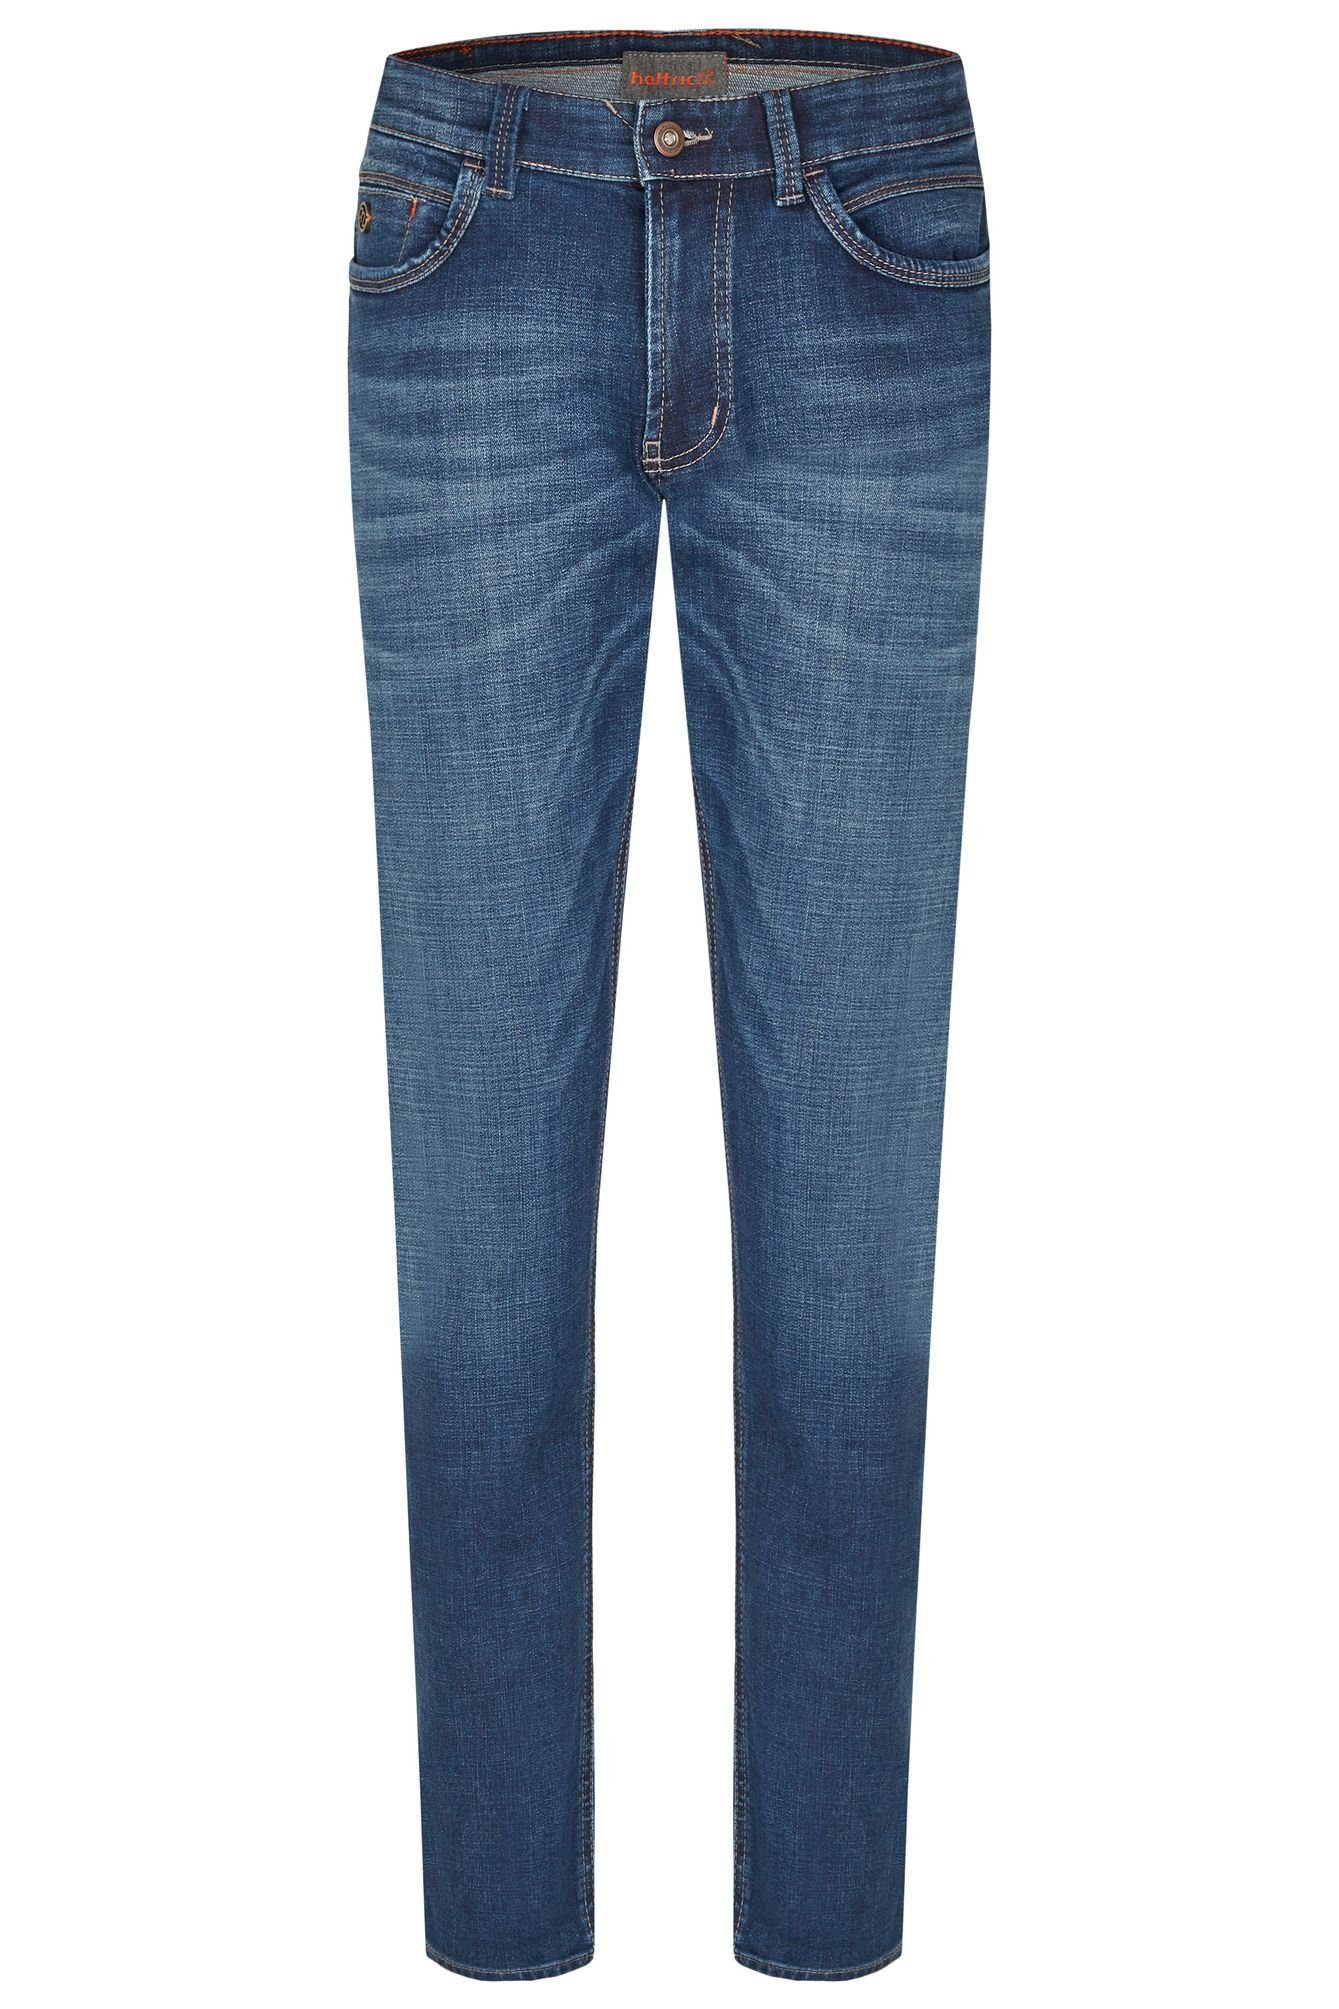 Hattric 5-Pocket-Jeans 688495-9690 blue (42)